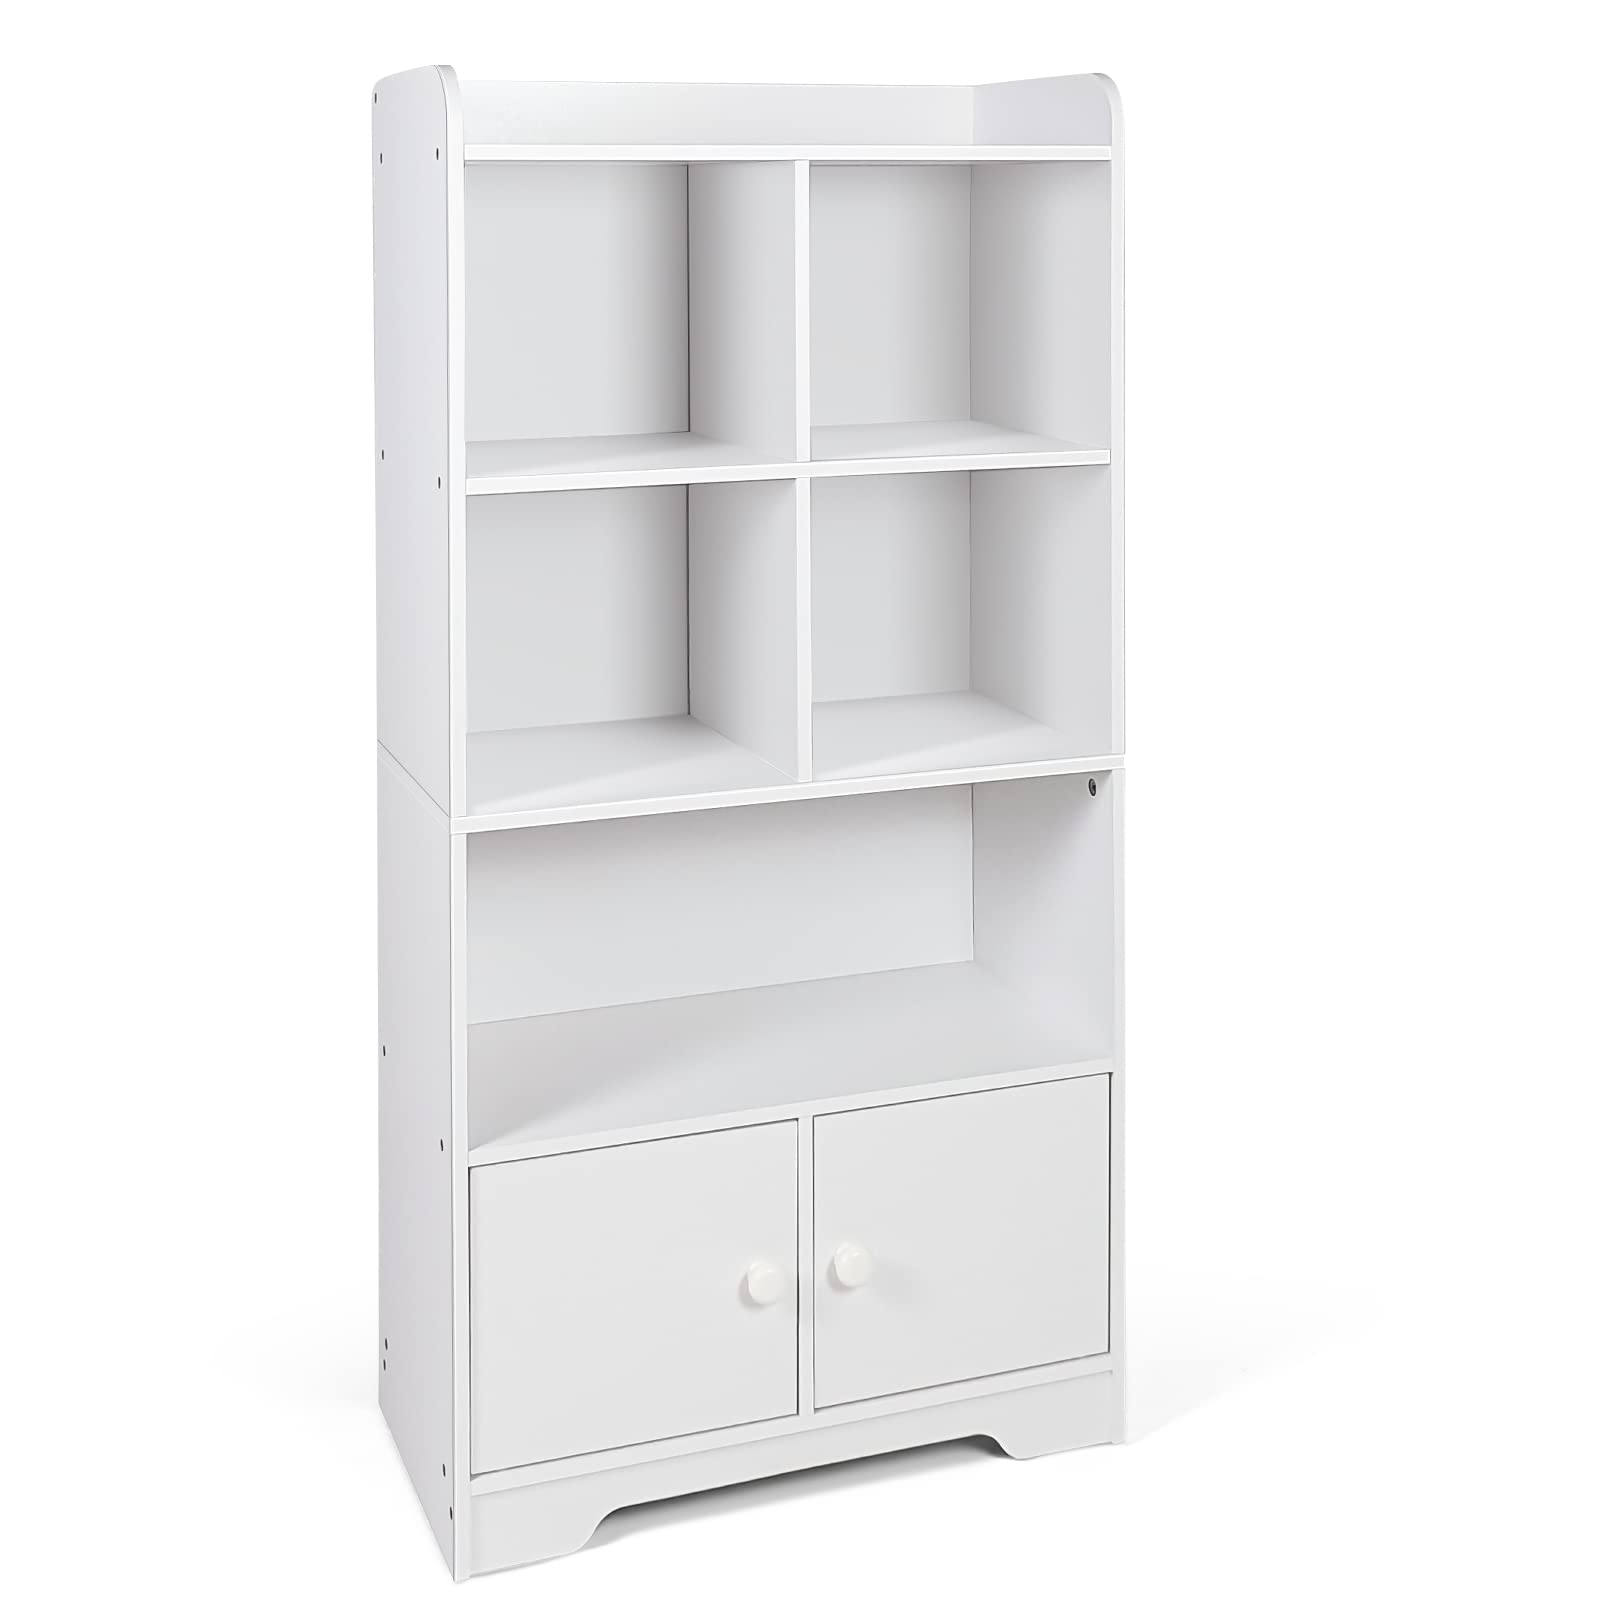 Giantex 4-Tier Bookcase with Doors, 47.5'' Tall Freestanding White Bookshelf with 3 Shelf